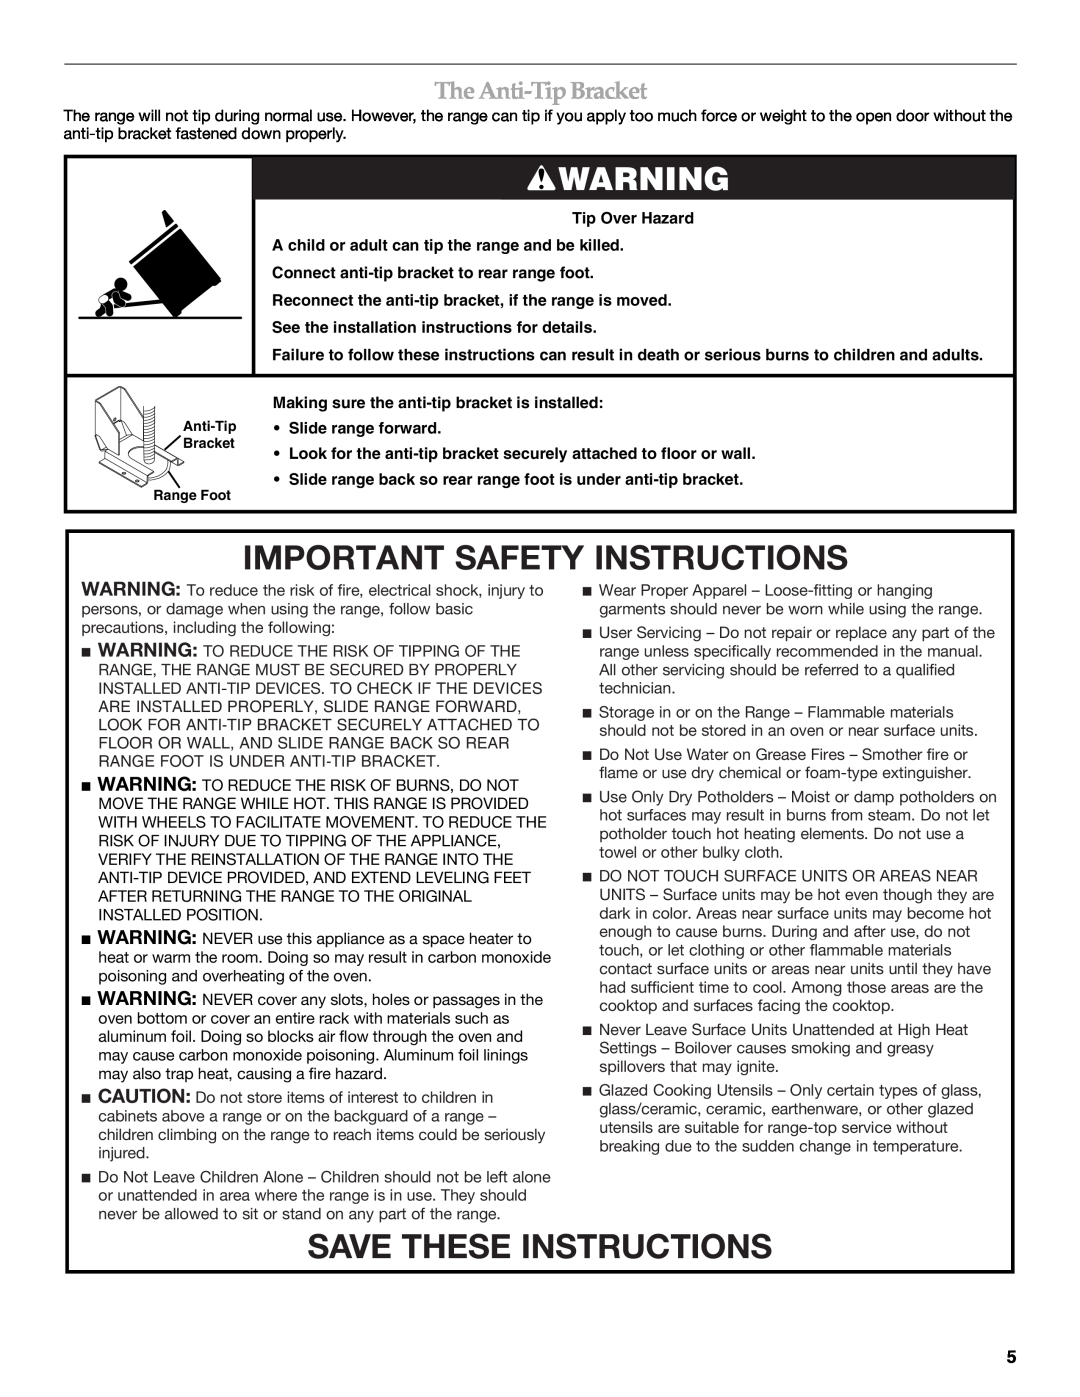 KitchenAid KDRU763.KDRU manual Important Safety Instructions, Save These Instructions, The Anti-Tip Bracket 